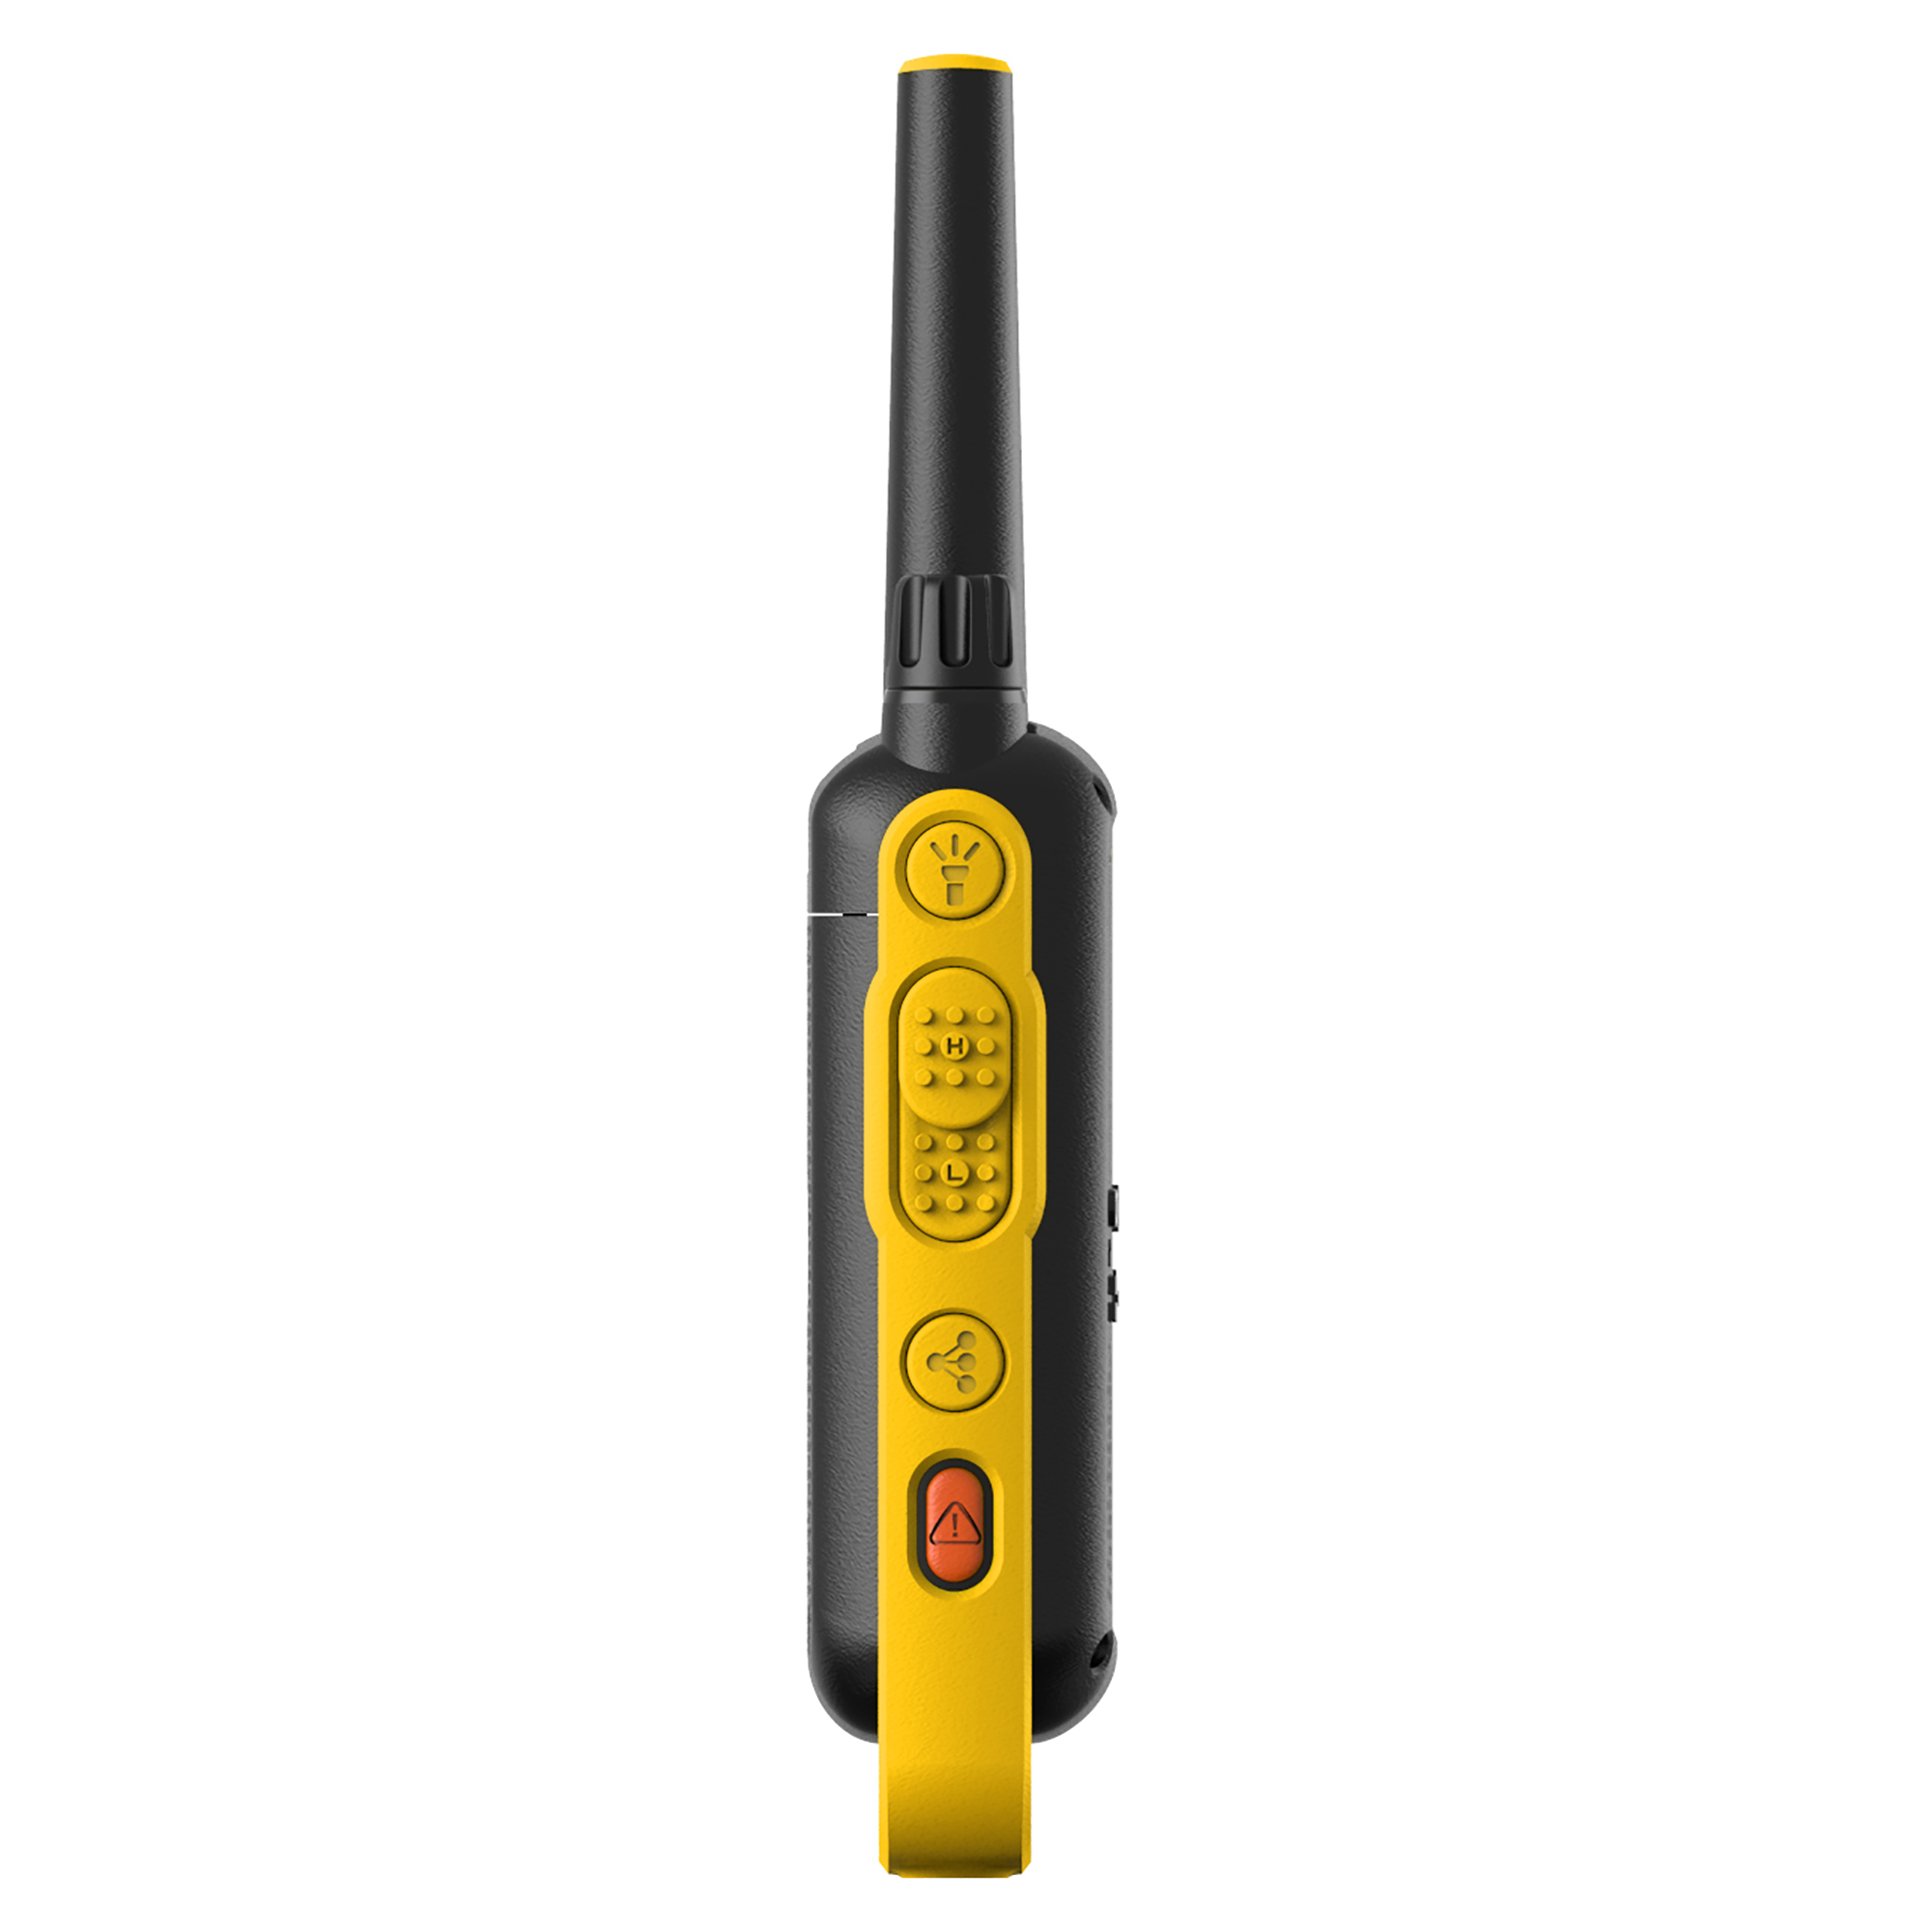 Motorola Solutions T470 Two-Way Radio Black W/Yellow (2 Pack)